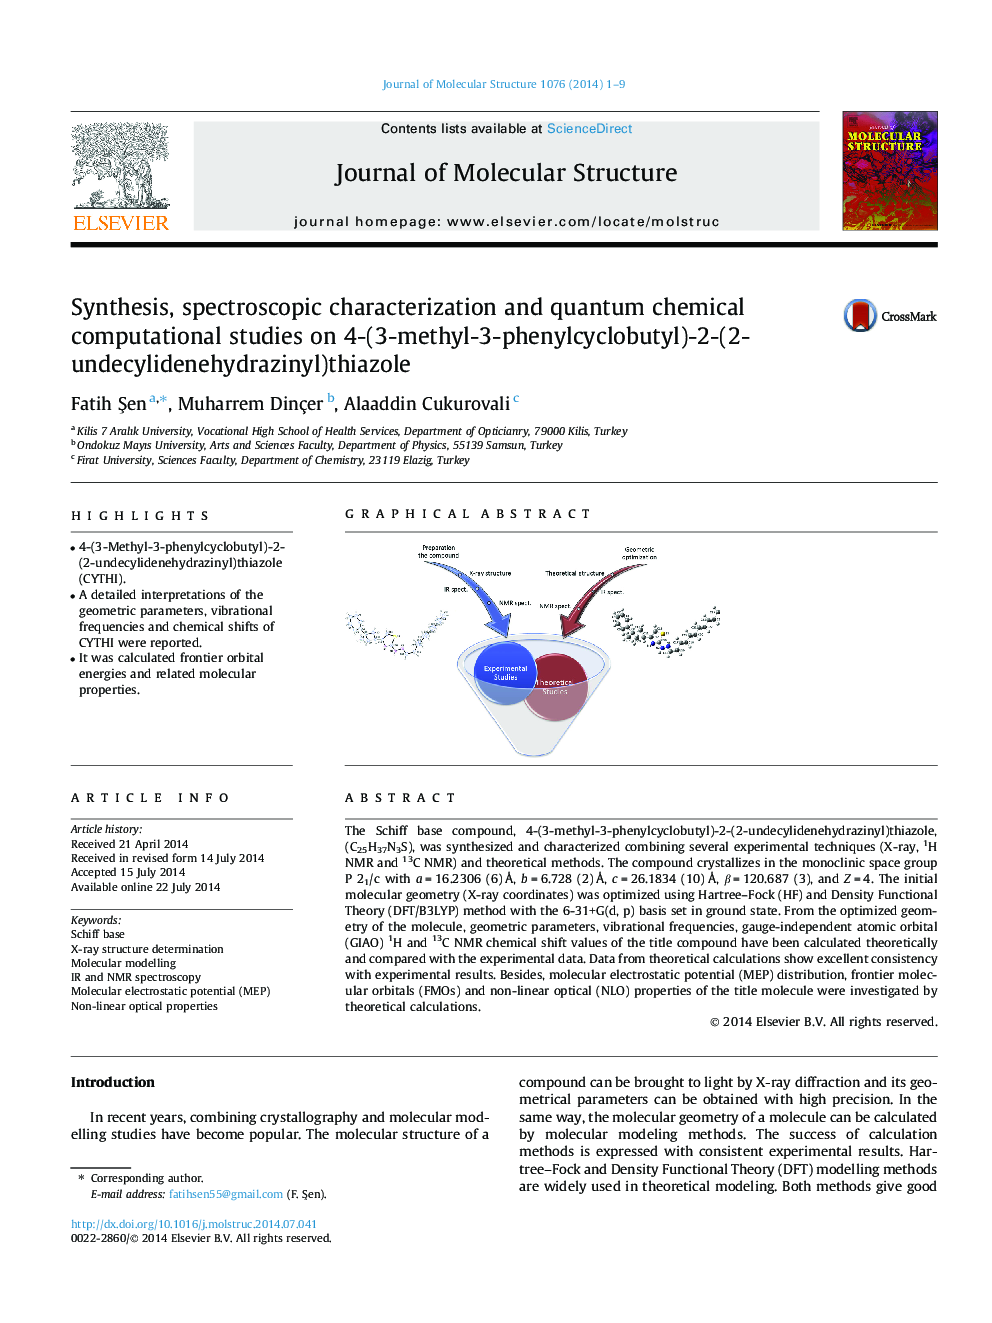 Synthesis, spectroscopic characterization and quantum chemical computational studies on 4-(3-methyl-3-phenylcyclobutyl)-2-(2-undecylidenehydrazinyl)thiazole